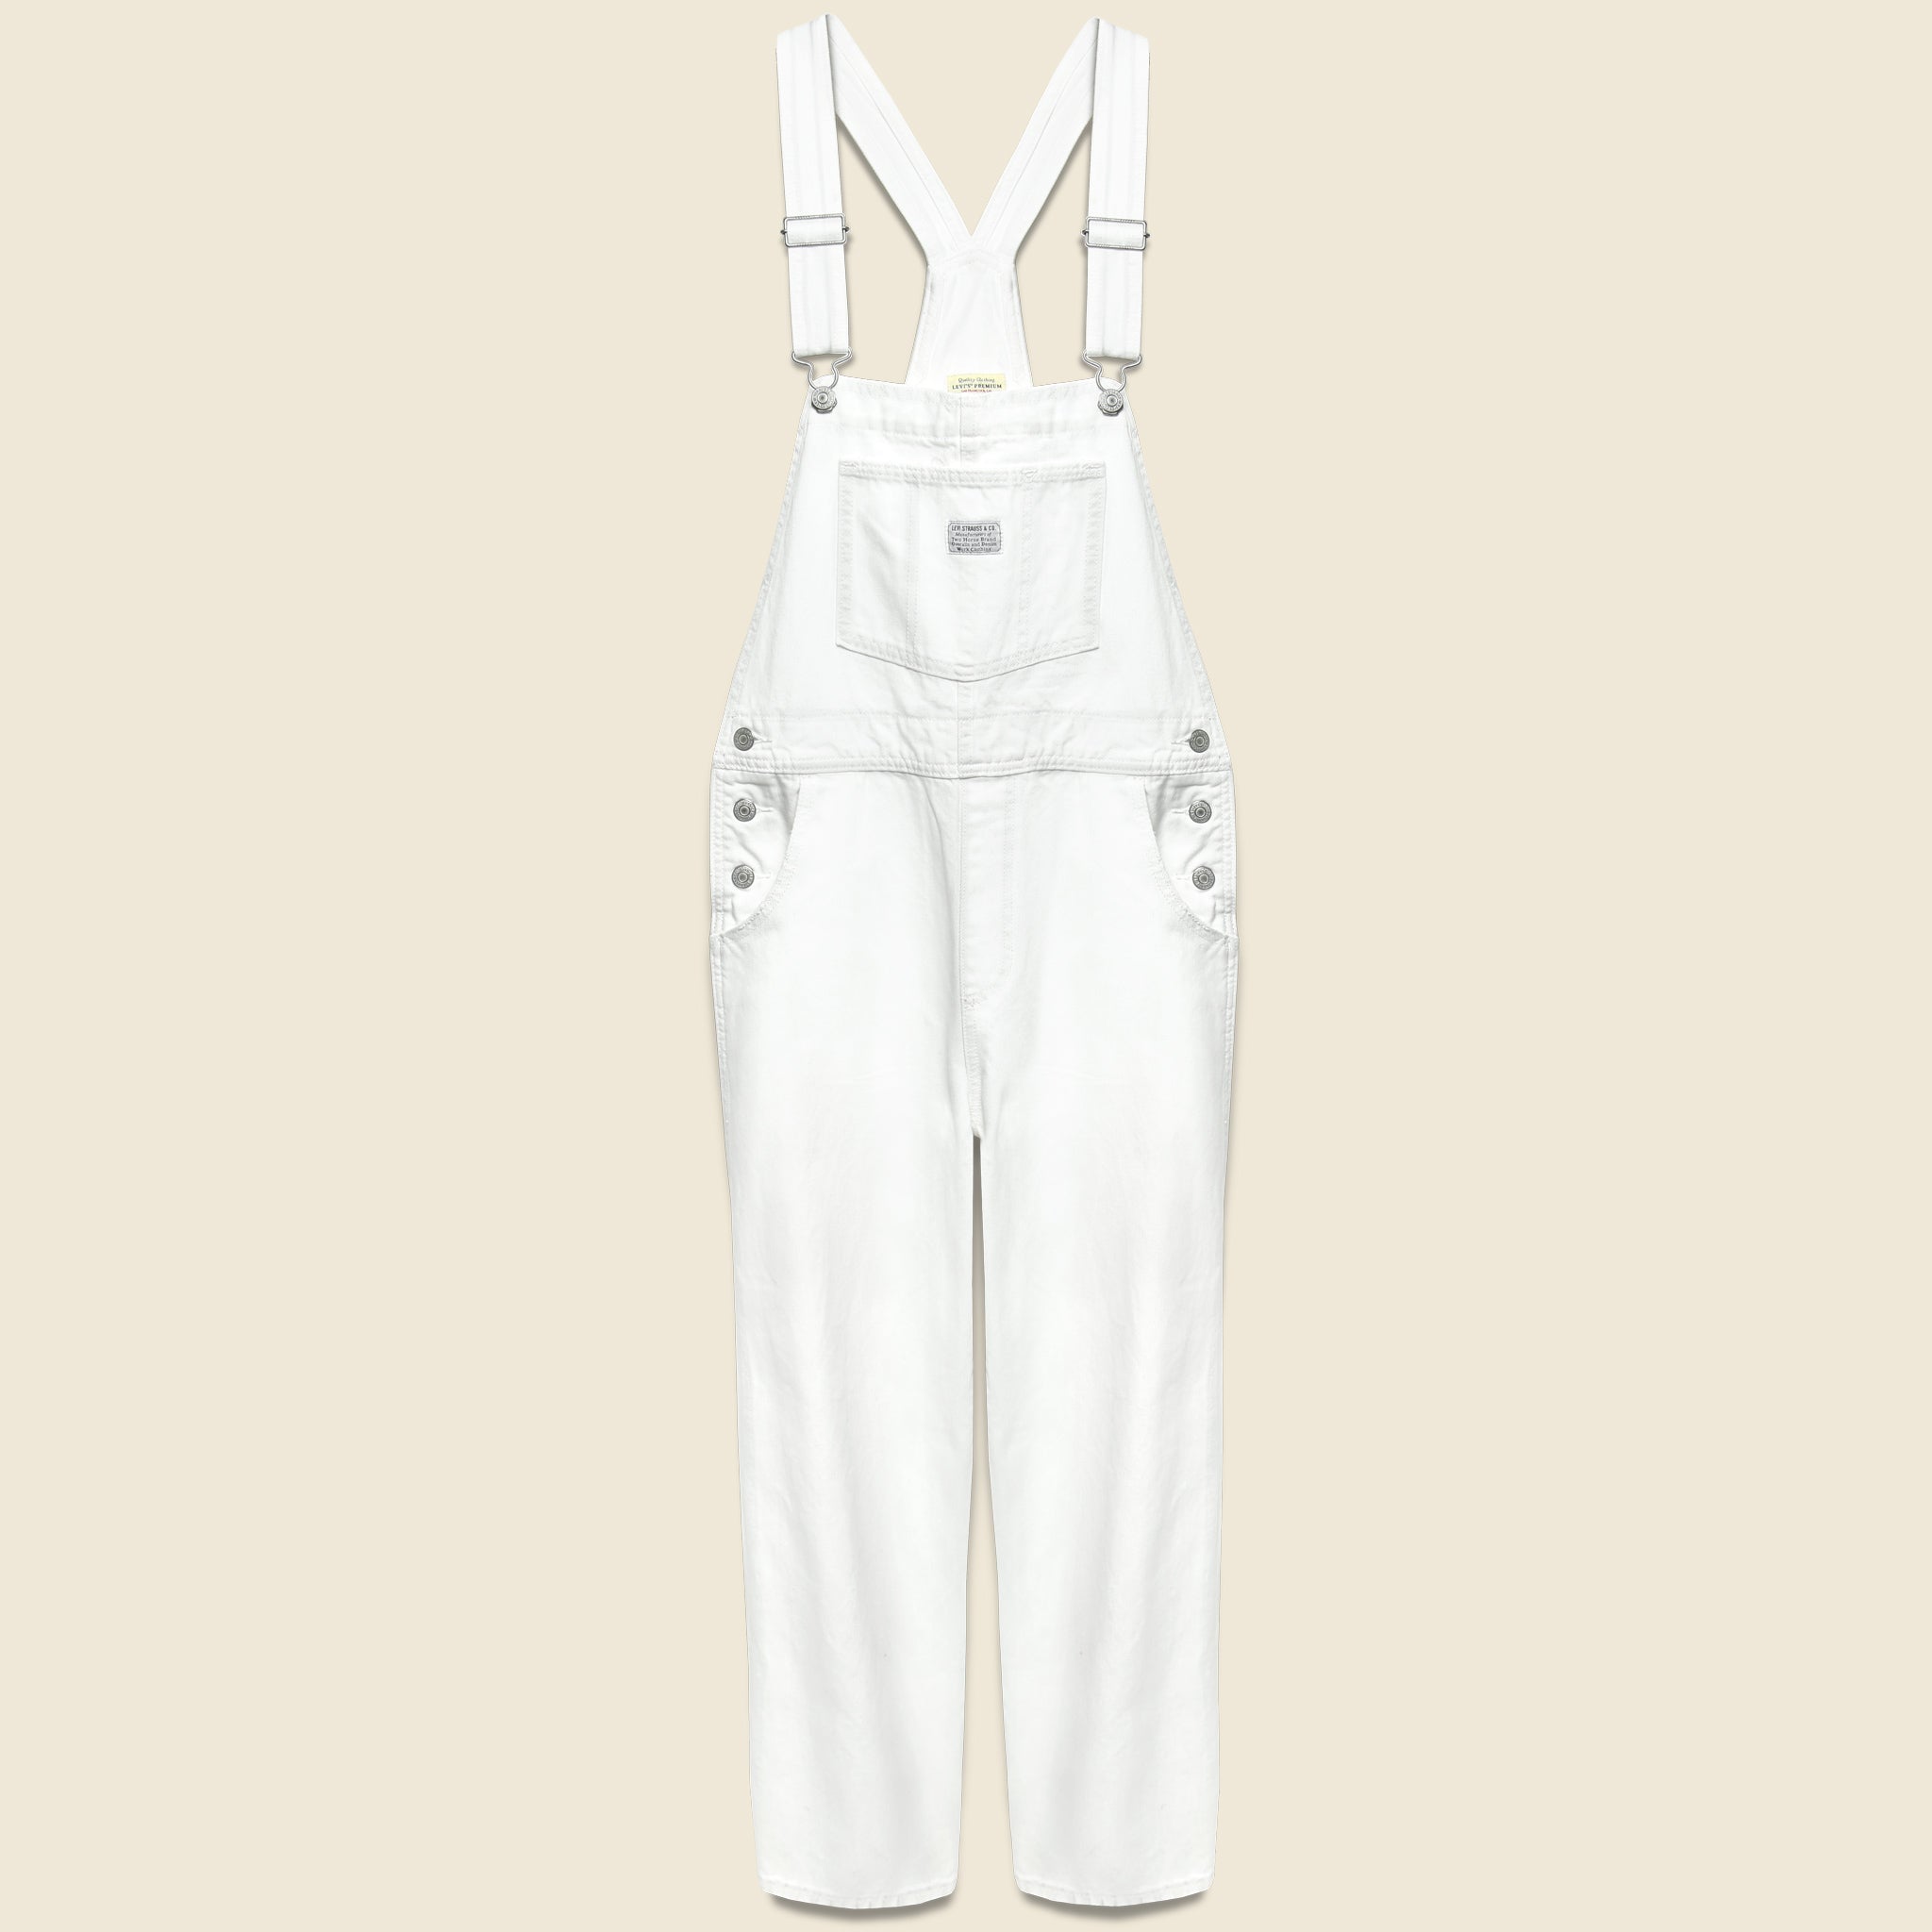 white levis overalls